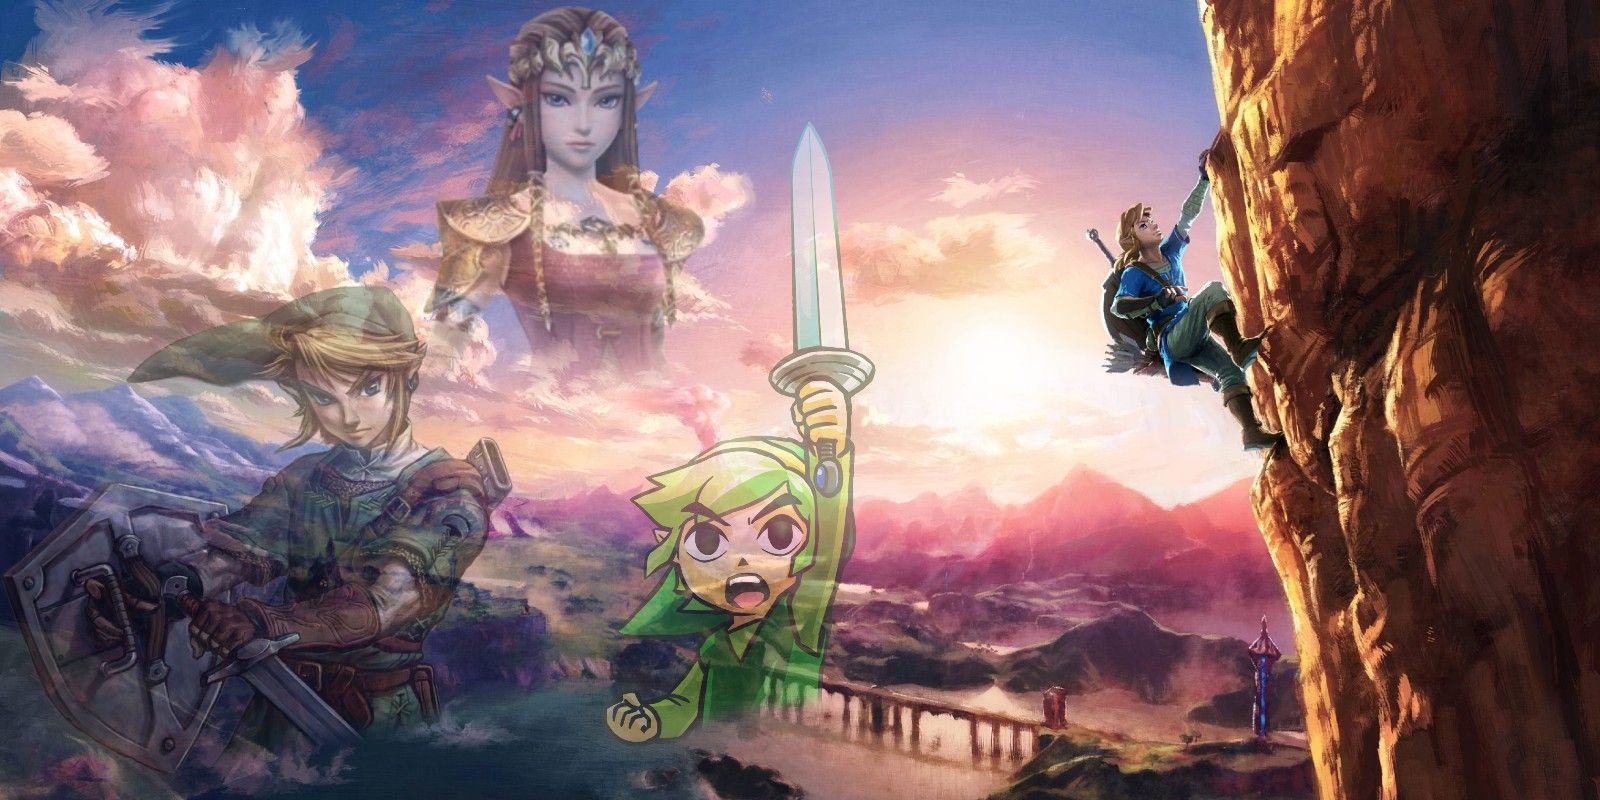 Zelda Wind Waker To REPLACE BOTW 2 on Nintendo Switch in 2022